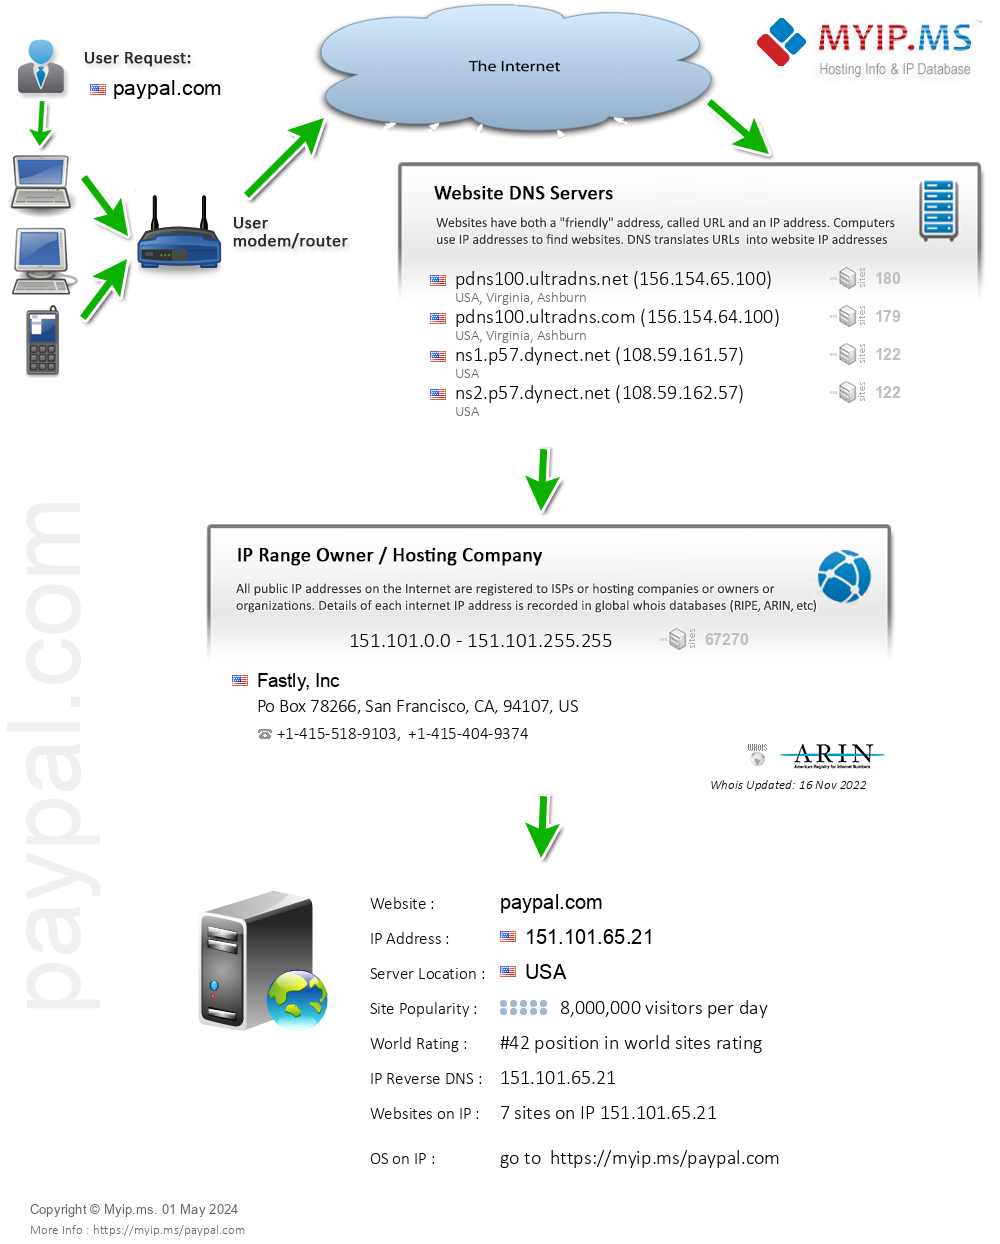 Paypal.com - Website Hosting Visual IP Diagram